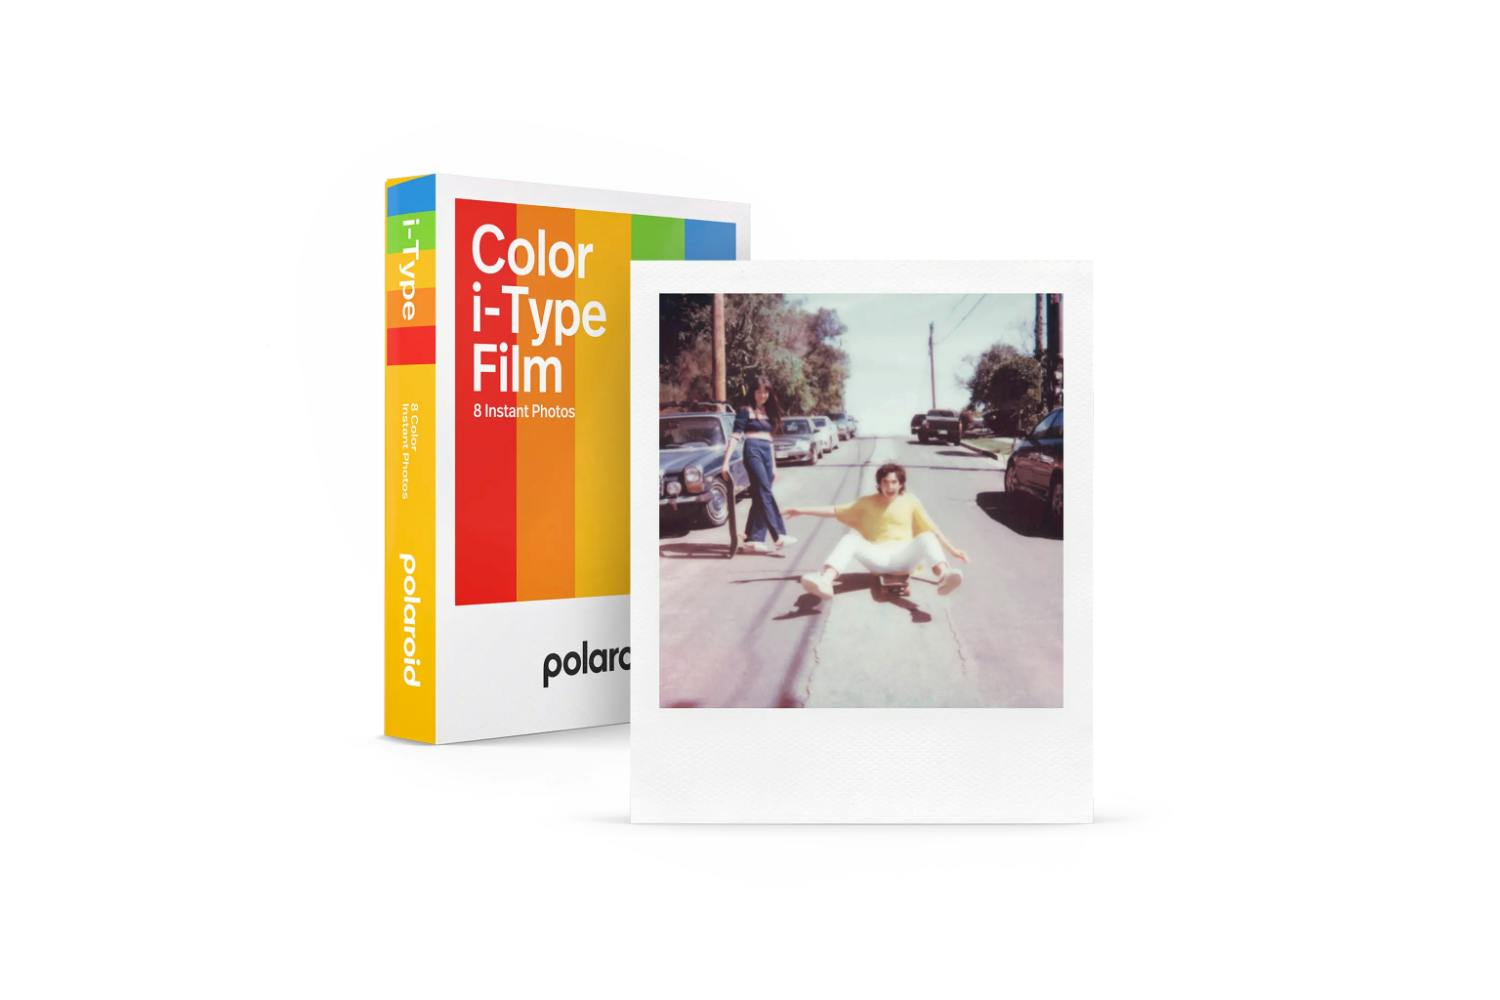 Polaroid Color i-Type Film, 1 Pack